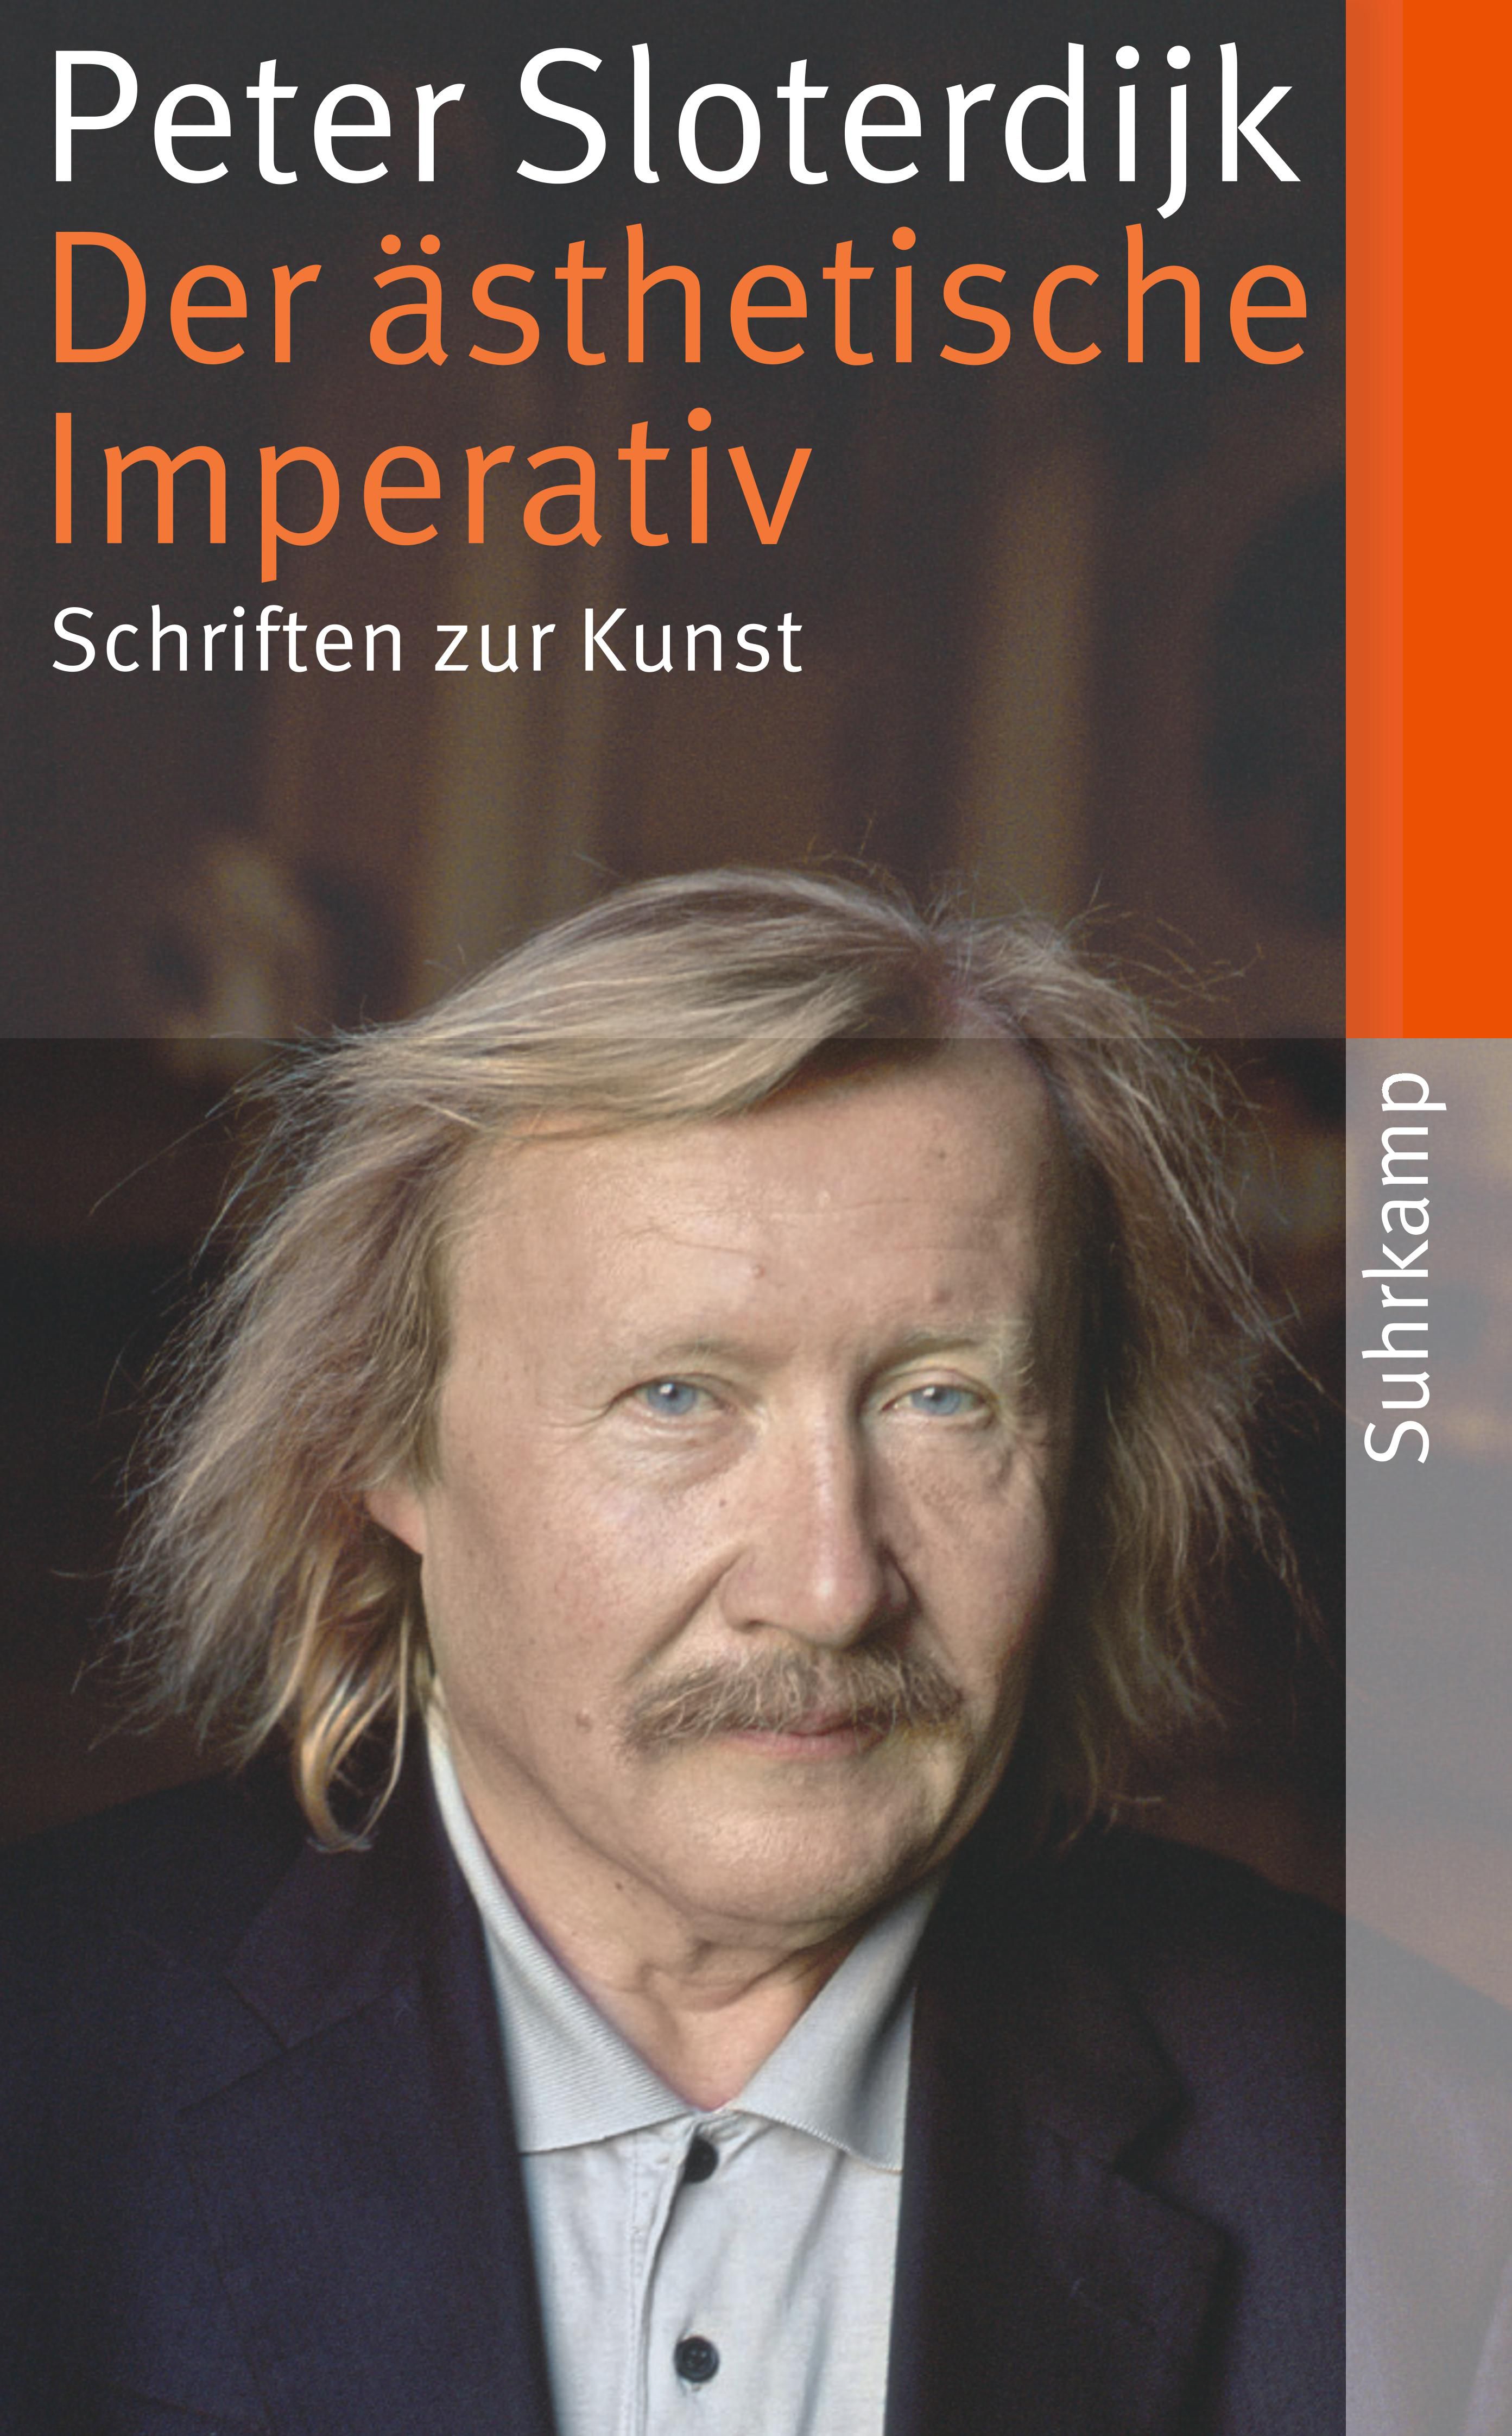 Peter Sloterdijk: The Aesthetic Imperative (Der ästhetische Imperativ, Suhrkamp Verlag)